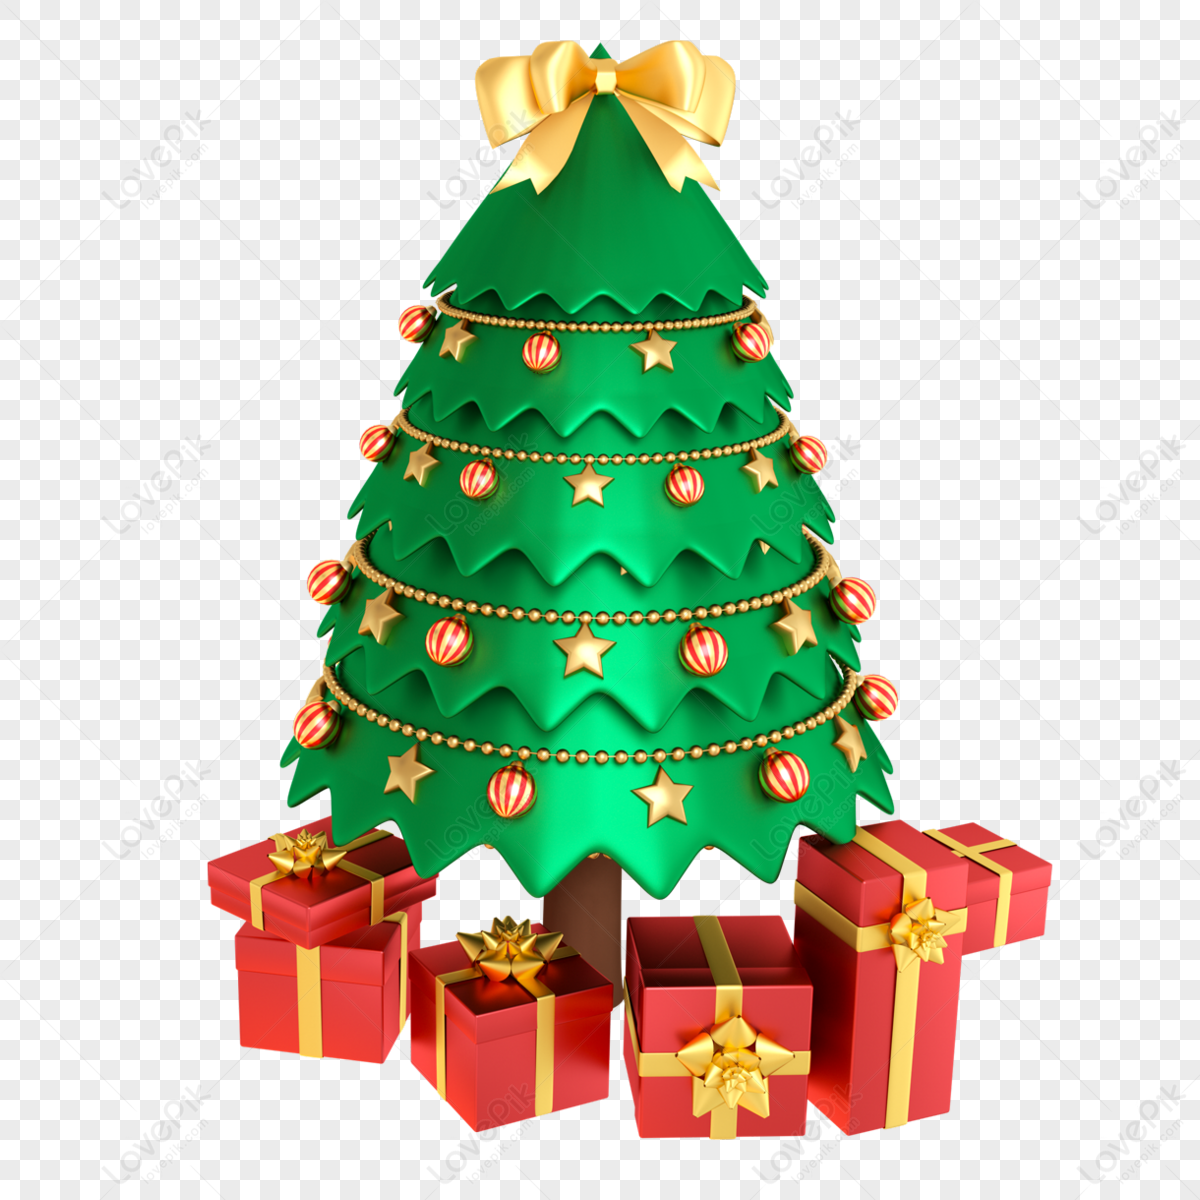 3d Christmas Tree Decoration Combination, Christmas Tree PNG Image ...